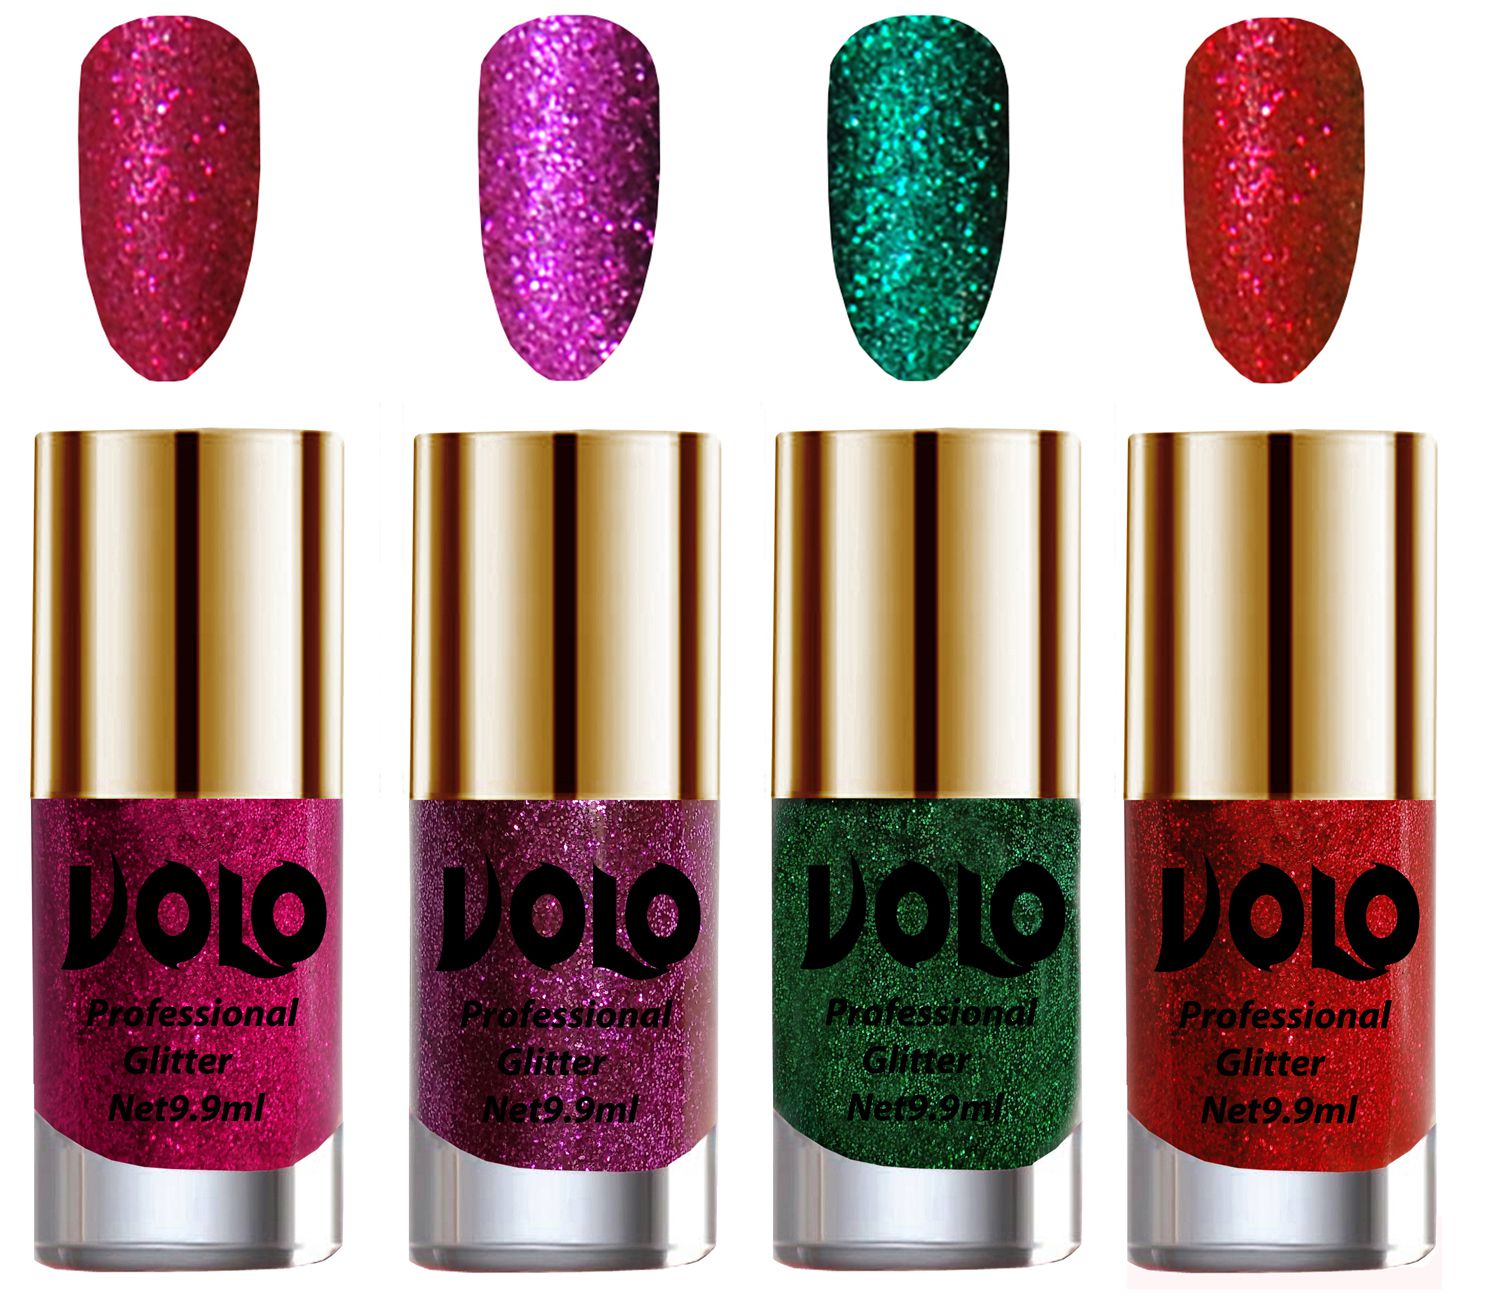     			VOLO Professionally Used Glitter Shine Nail Polish Magenta,Purple,Green Red Pack of 4 39 mL